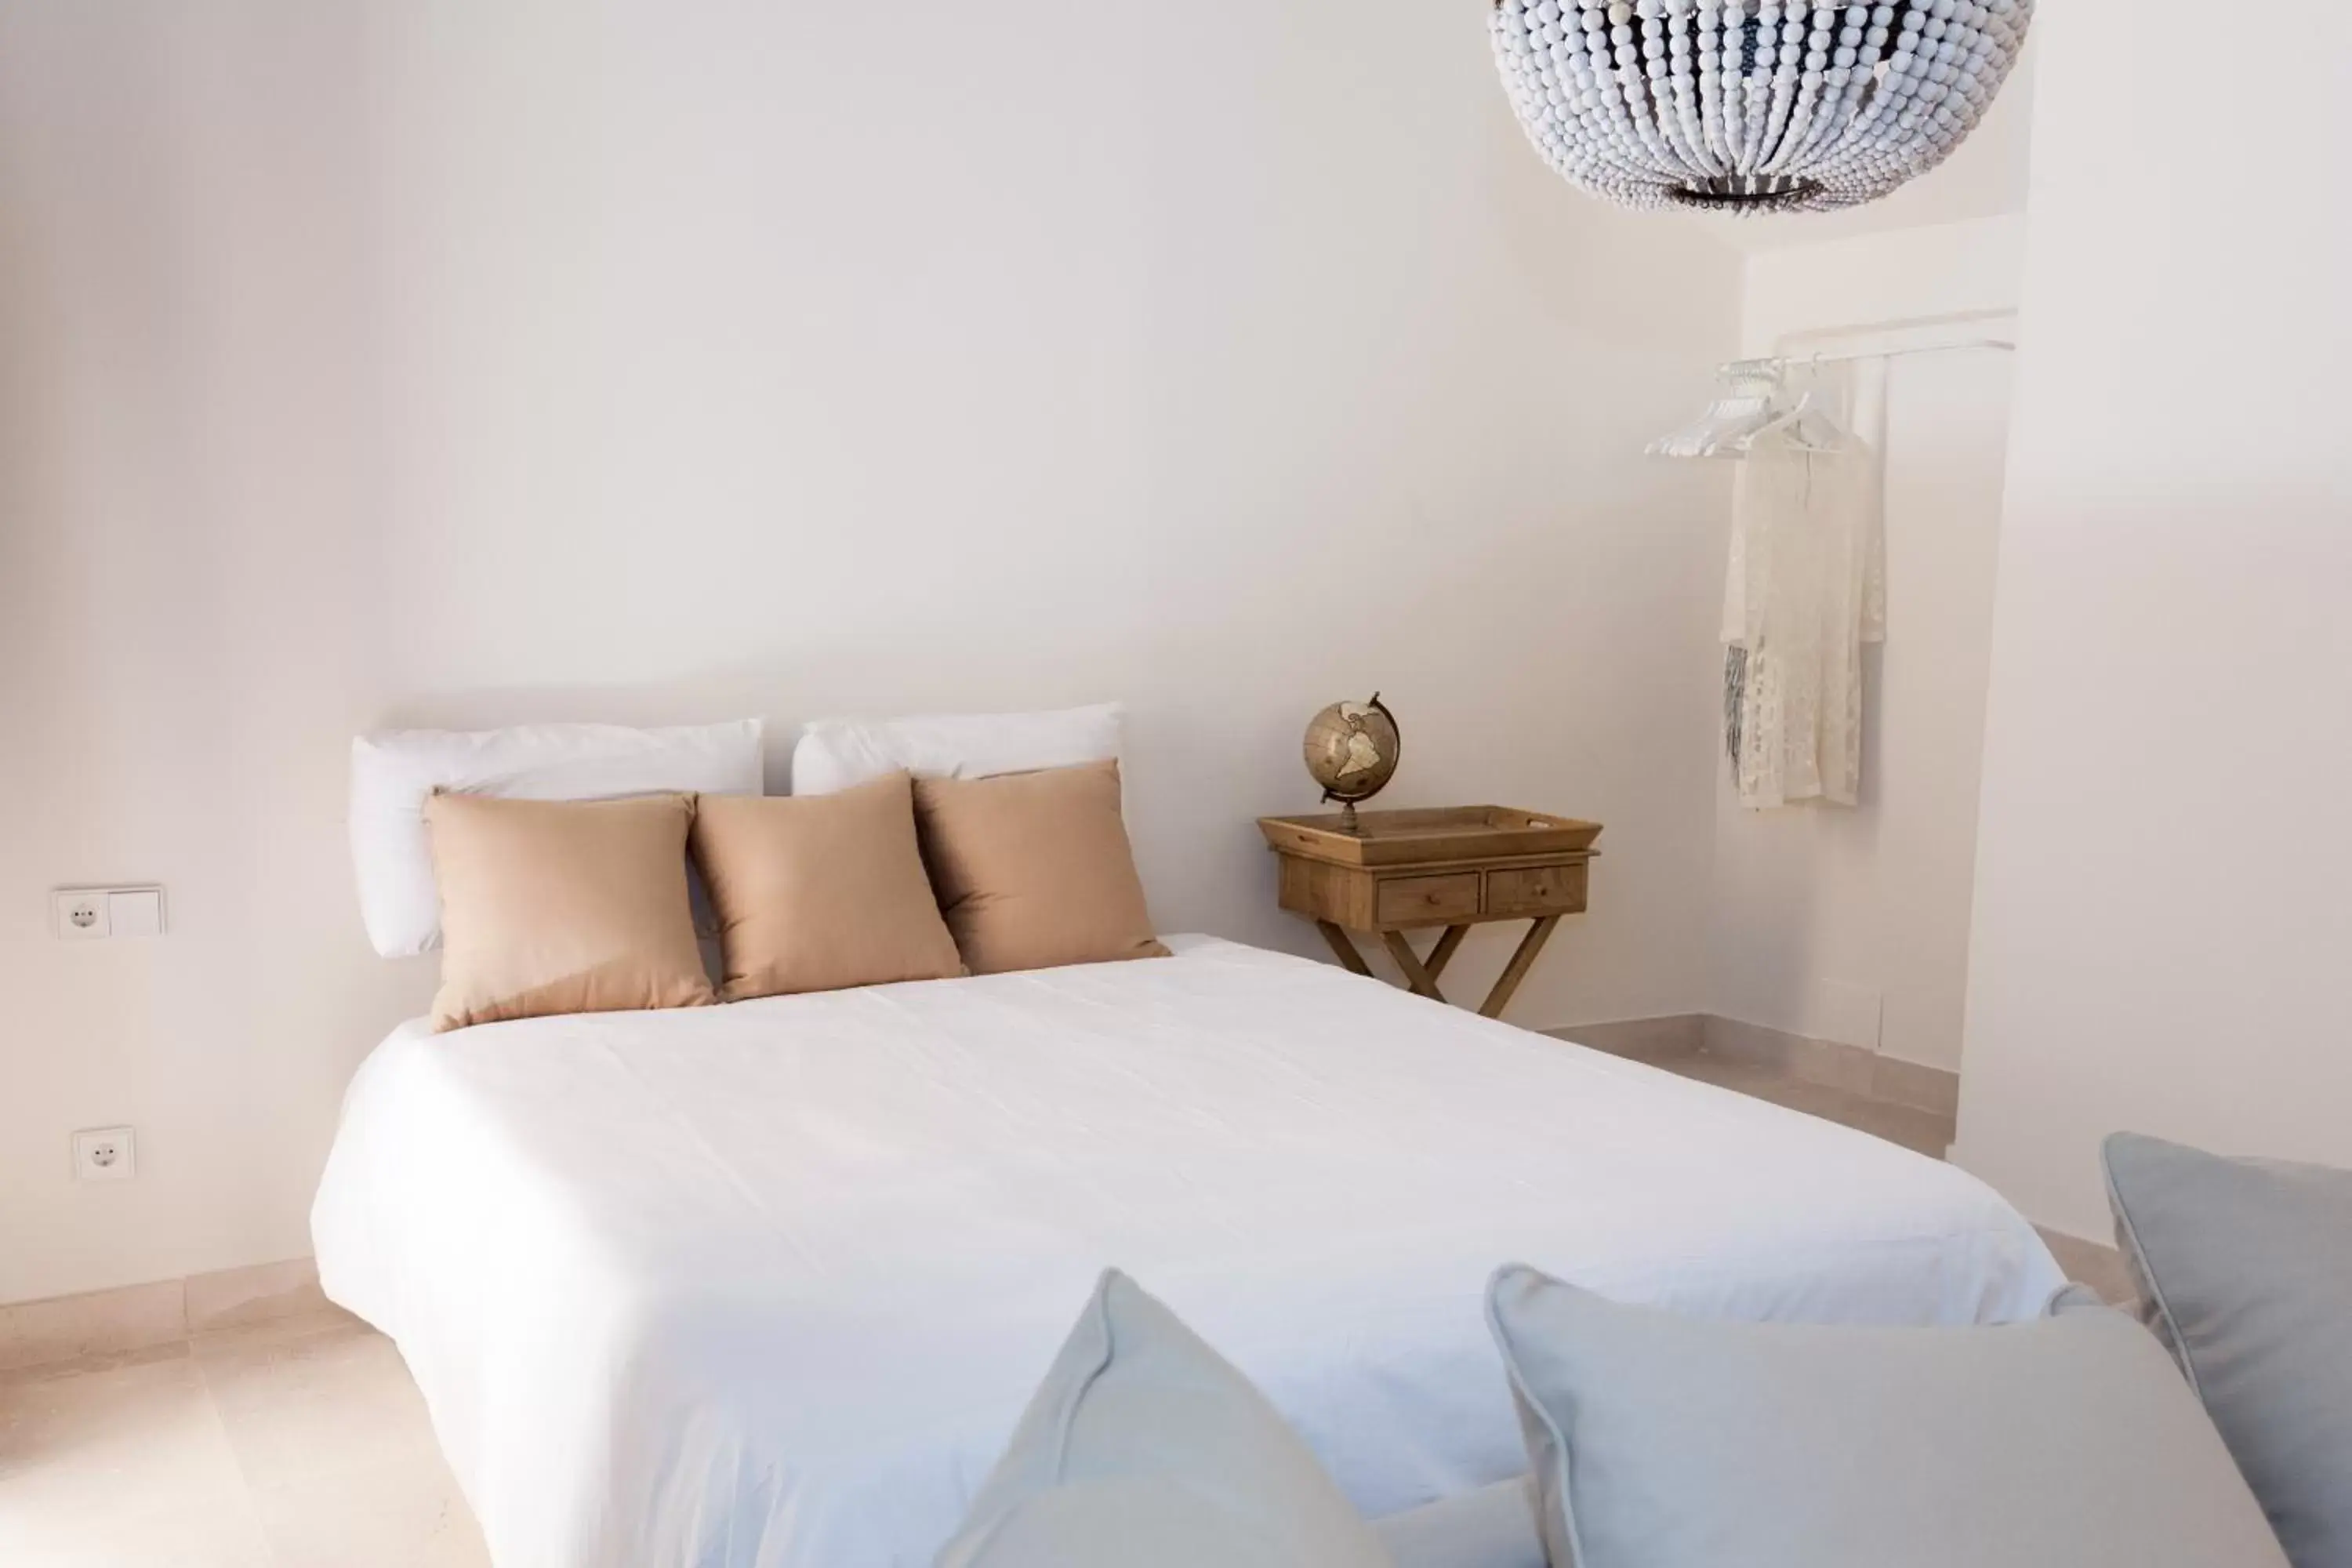 Bed, Room Photo in Can Savella - Turismo de Interior